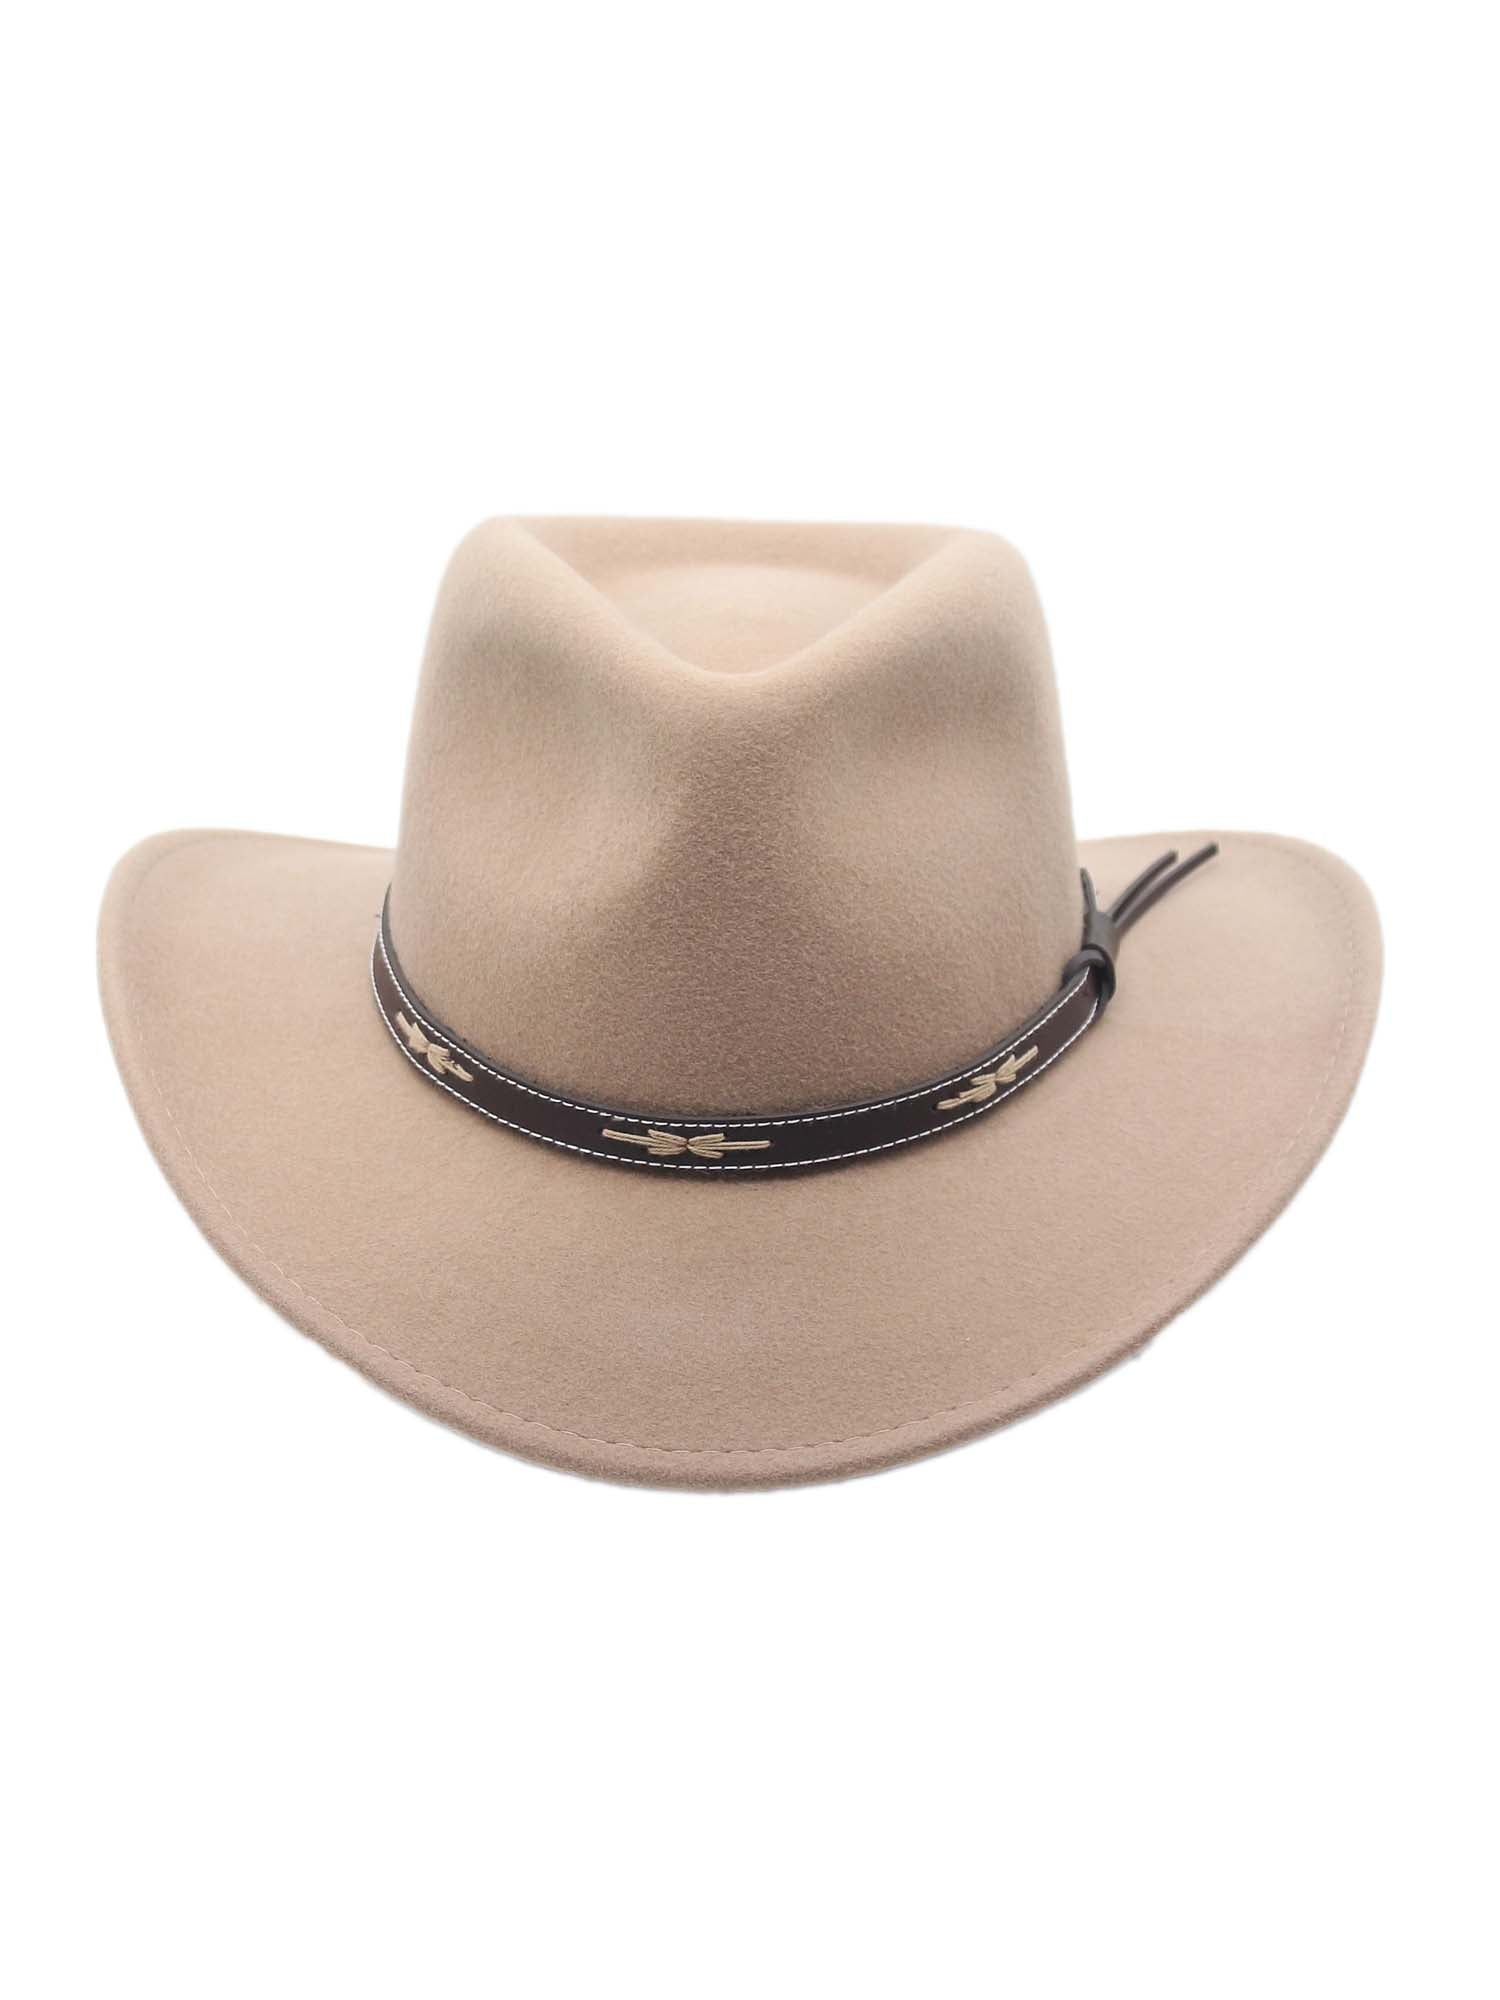 Santa Fe Crushable Wool Felt Outback Western Style Cowboy Hat by Silver Canyon